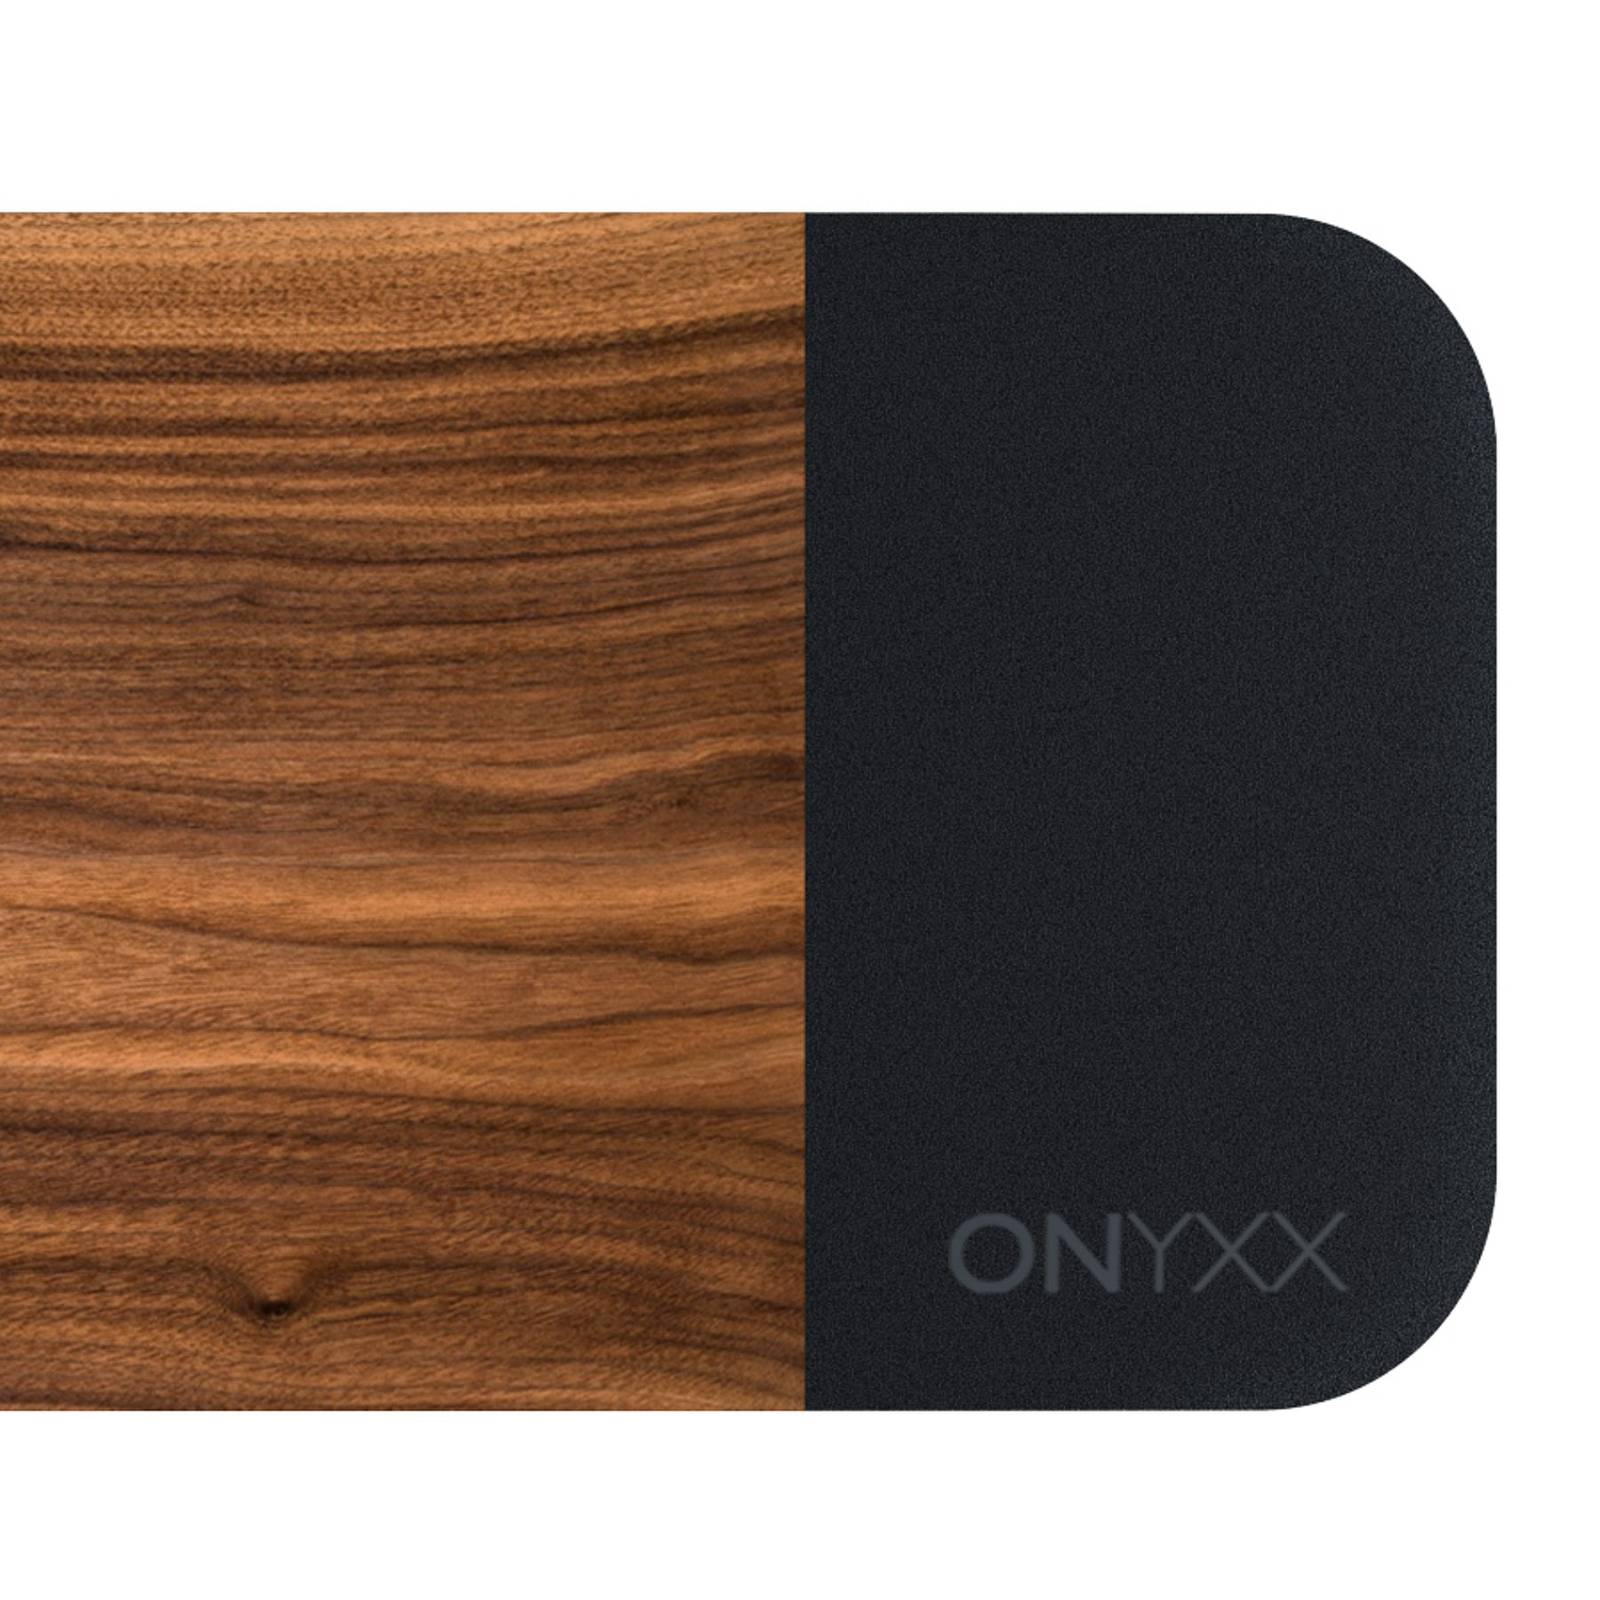 GRIMMEISEN Onyxx Linea Pro pendel nøddetræ/sort